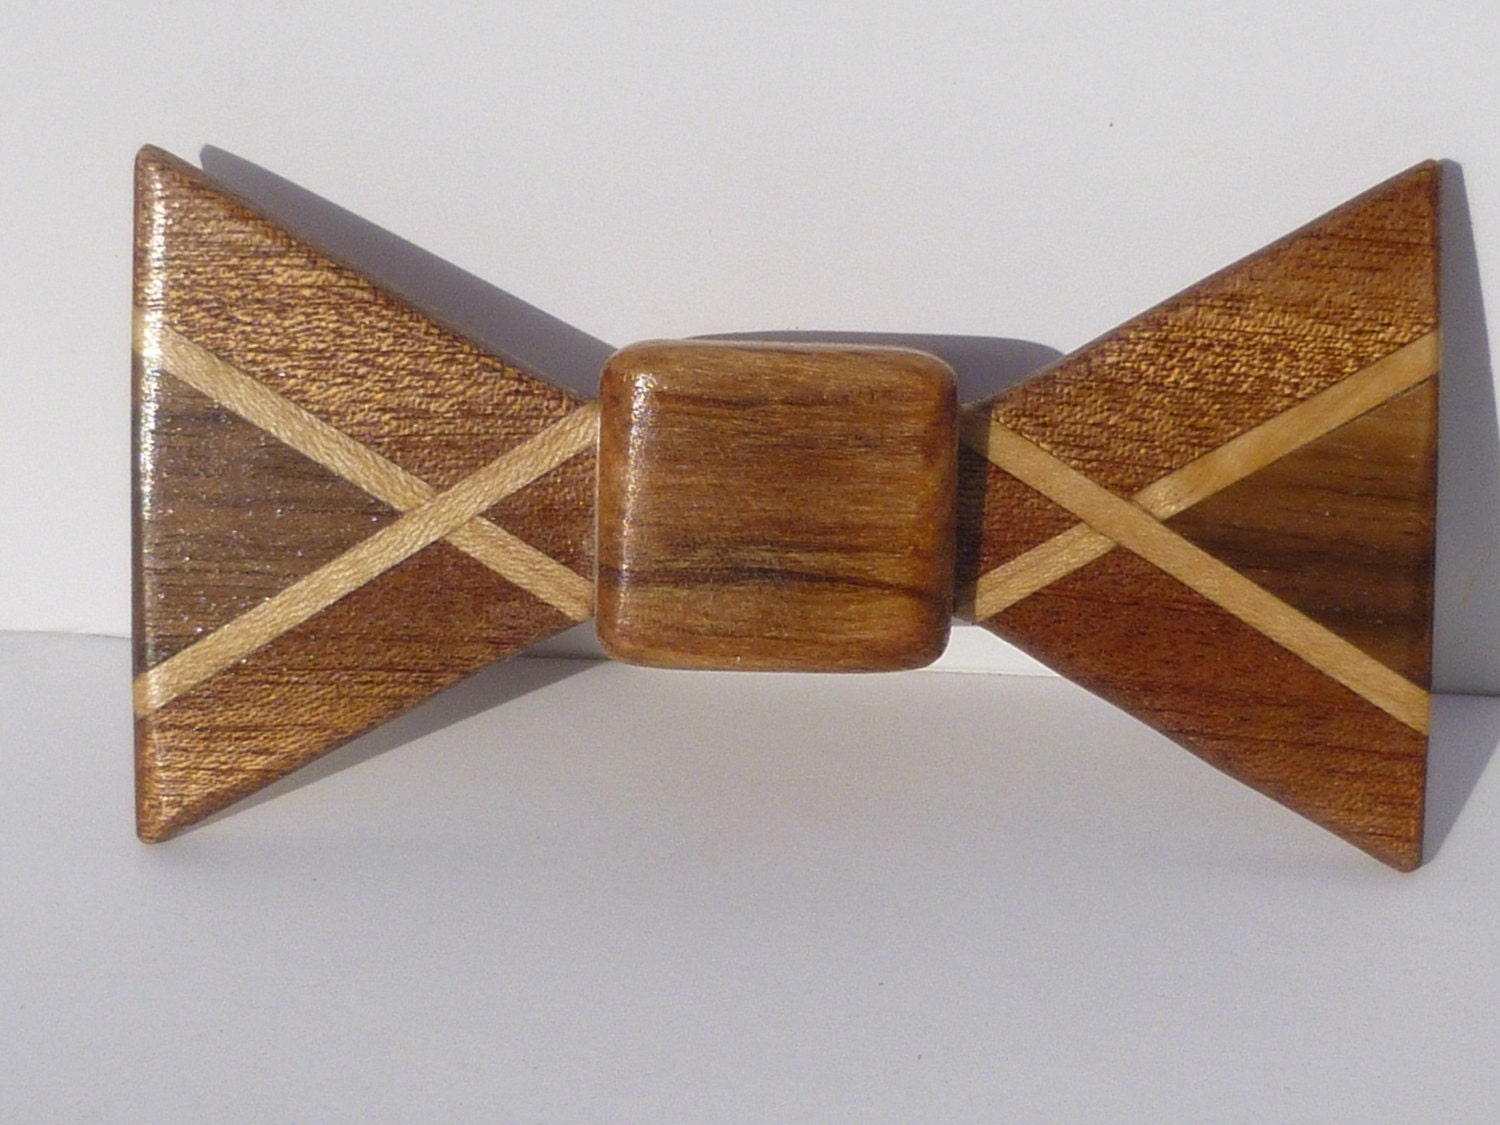 Wood Bow Tie Free Shipping.in U.S. Handmade